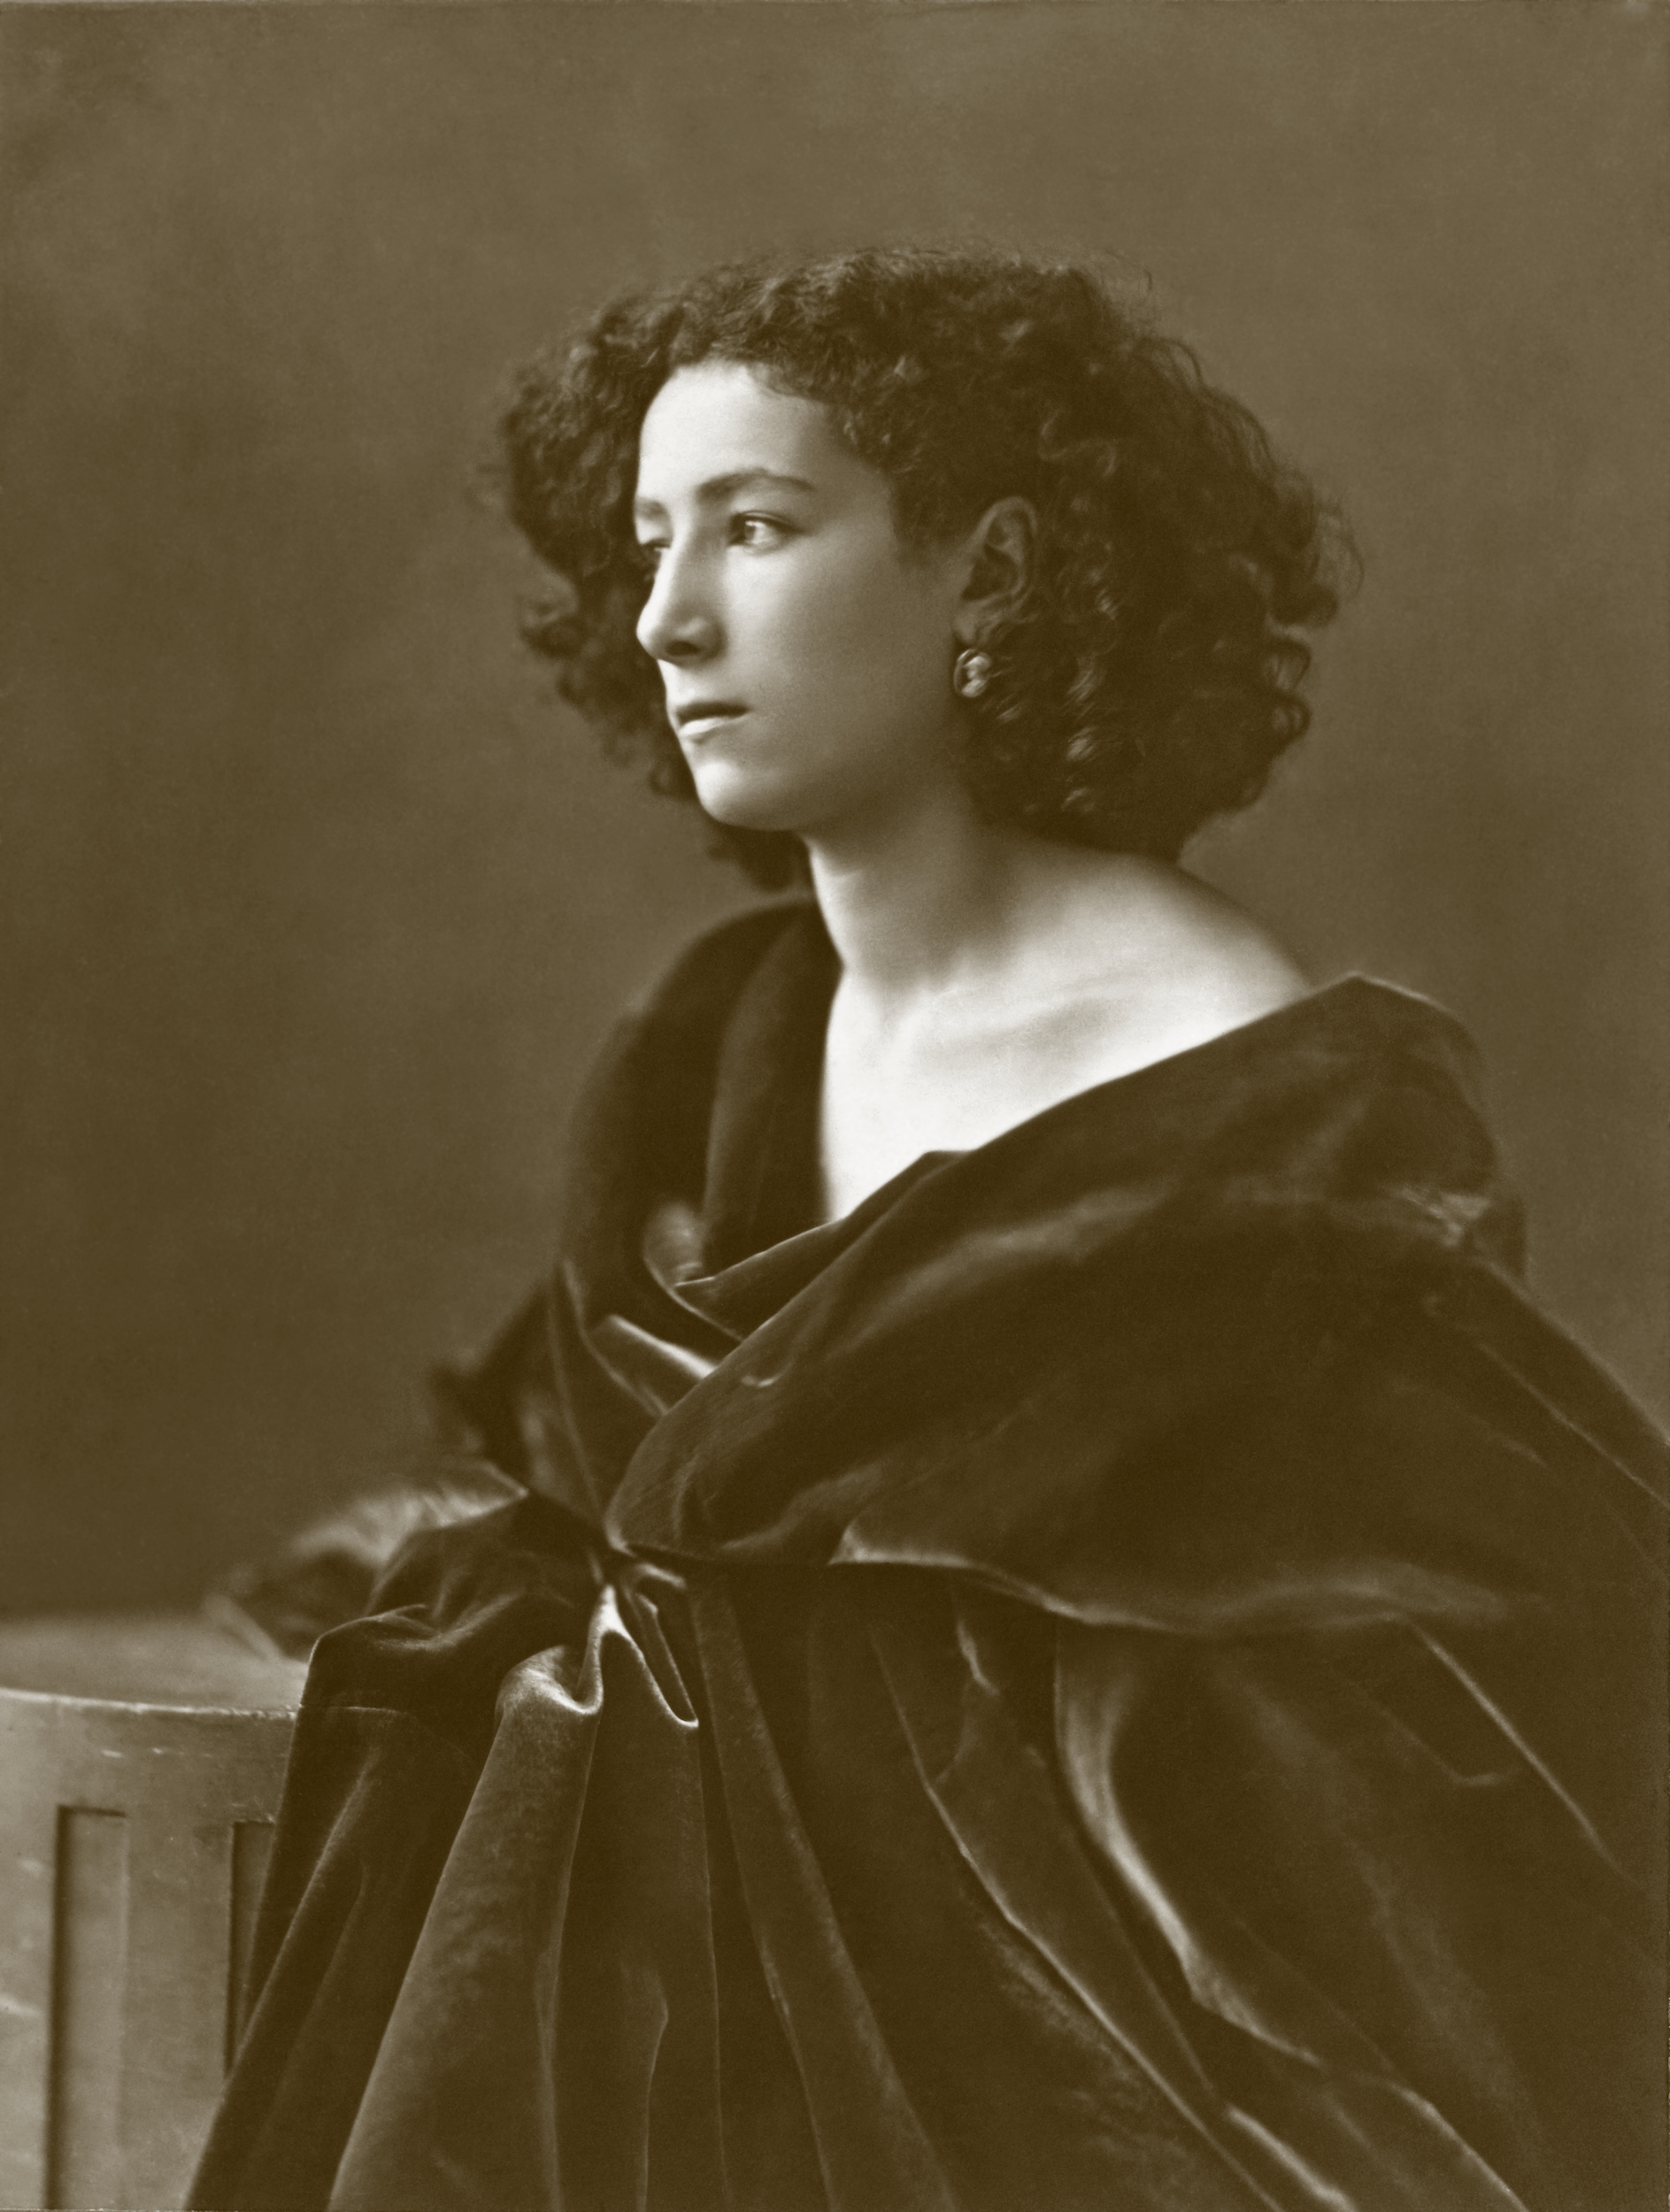 Sarah Bernhardt - 22 or 23 October 1844 - 26 March 1923